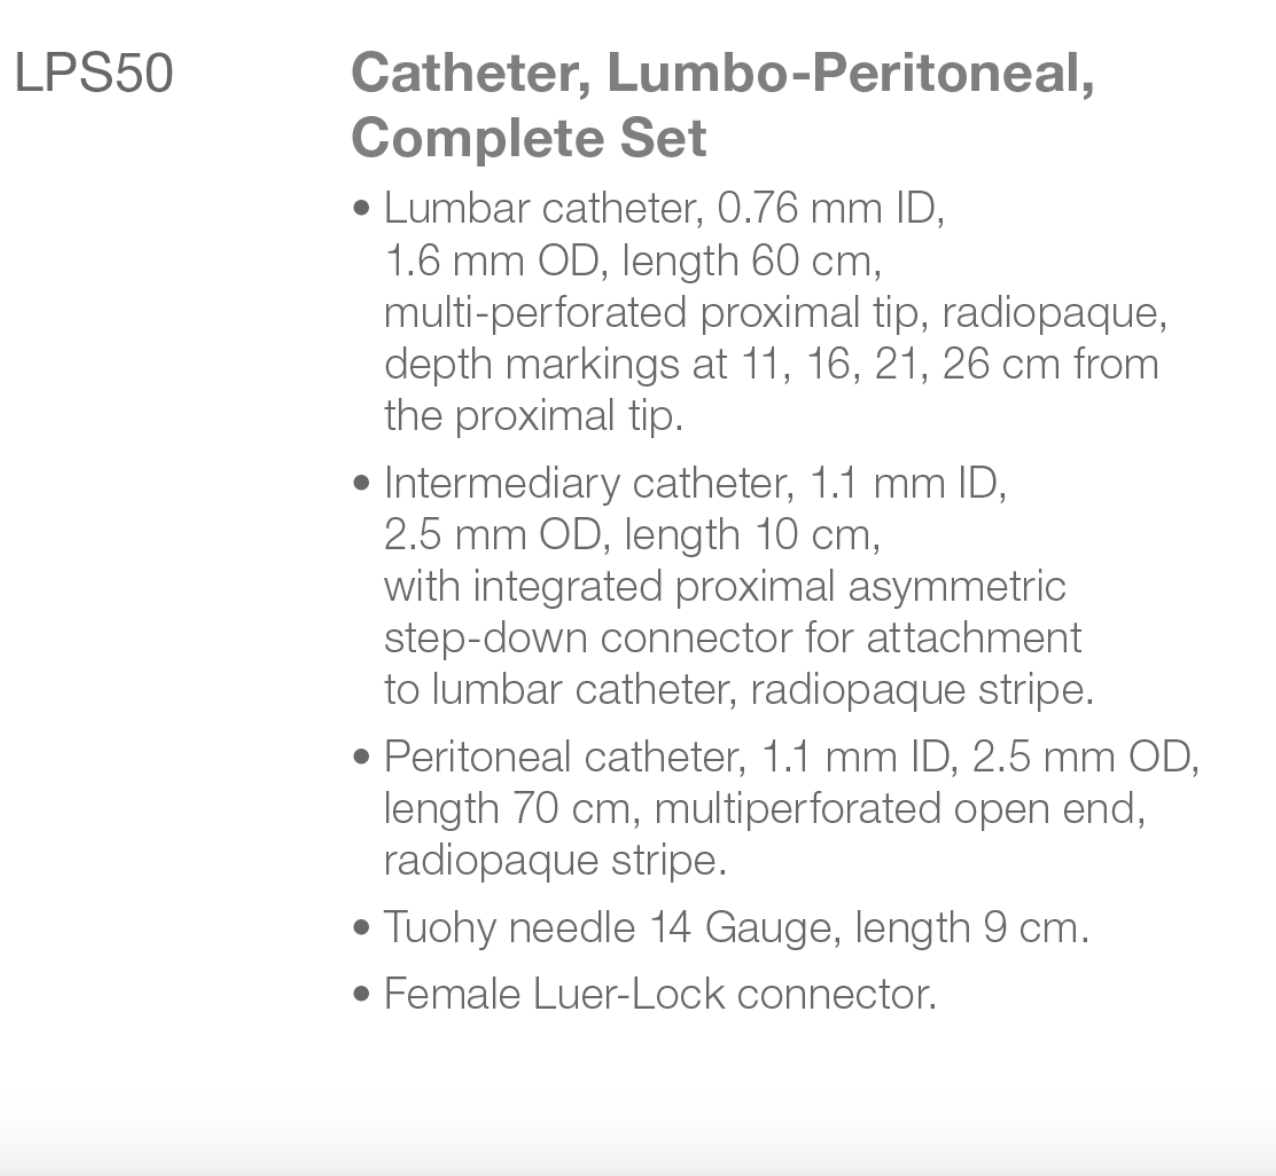 Sophysa LP550 Lumbo-Peritoneal Catheter Set Description Rycol Medical in Ireland